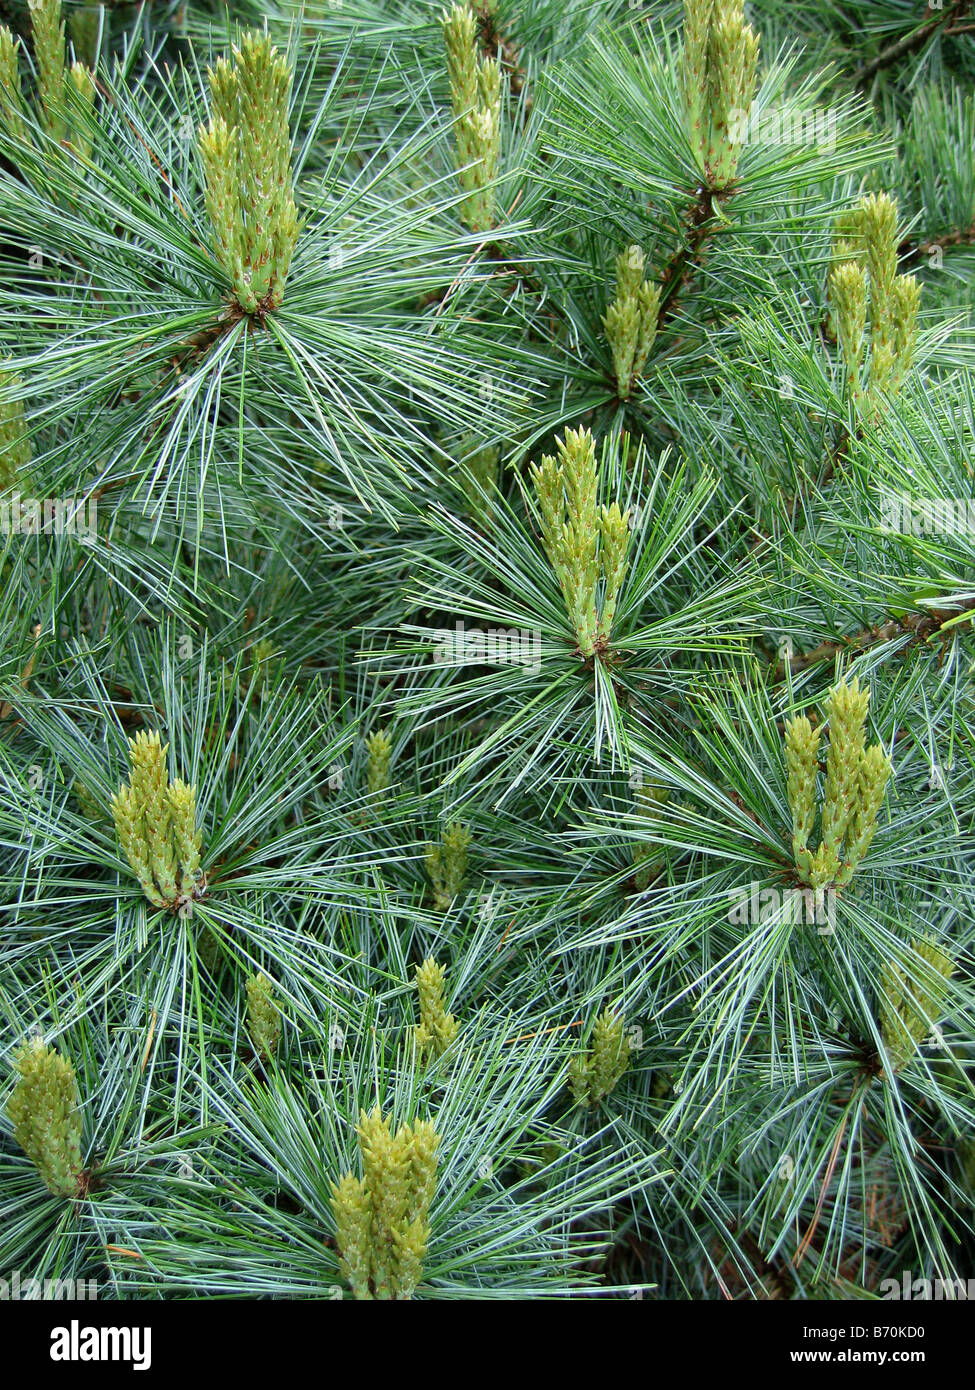 Eastern white pine (pinus strobus) foliage and candles Stock Photo